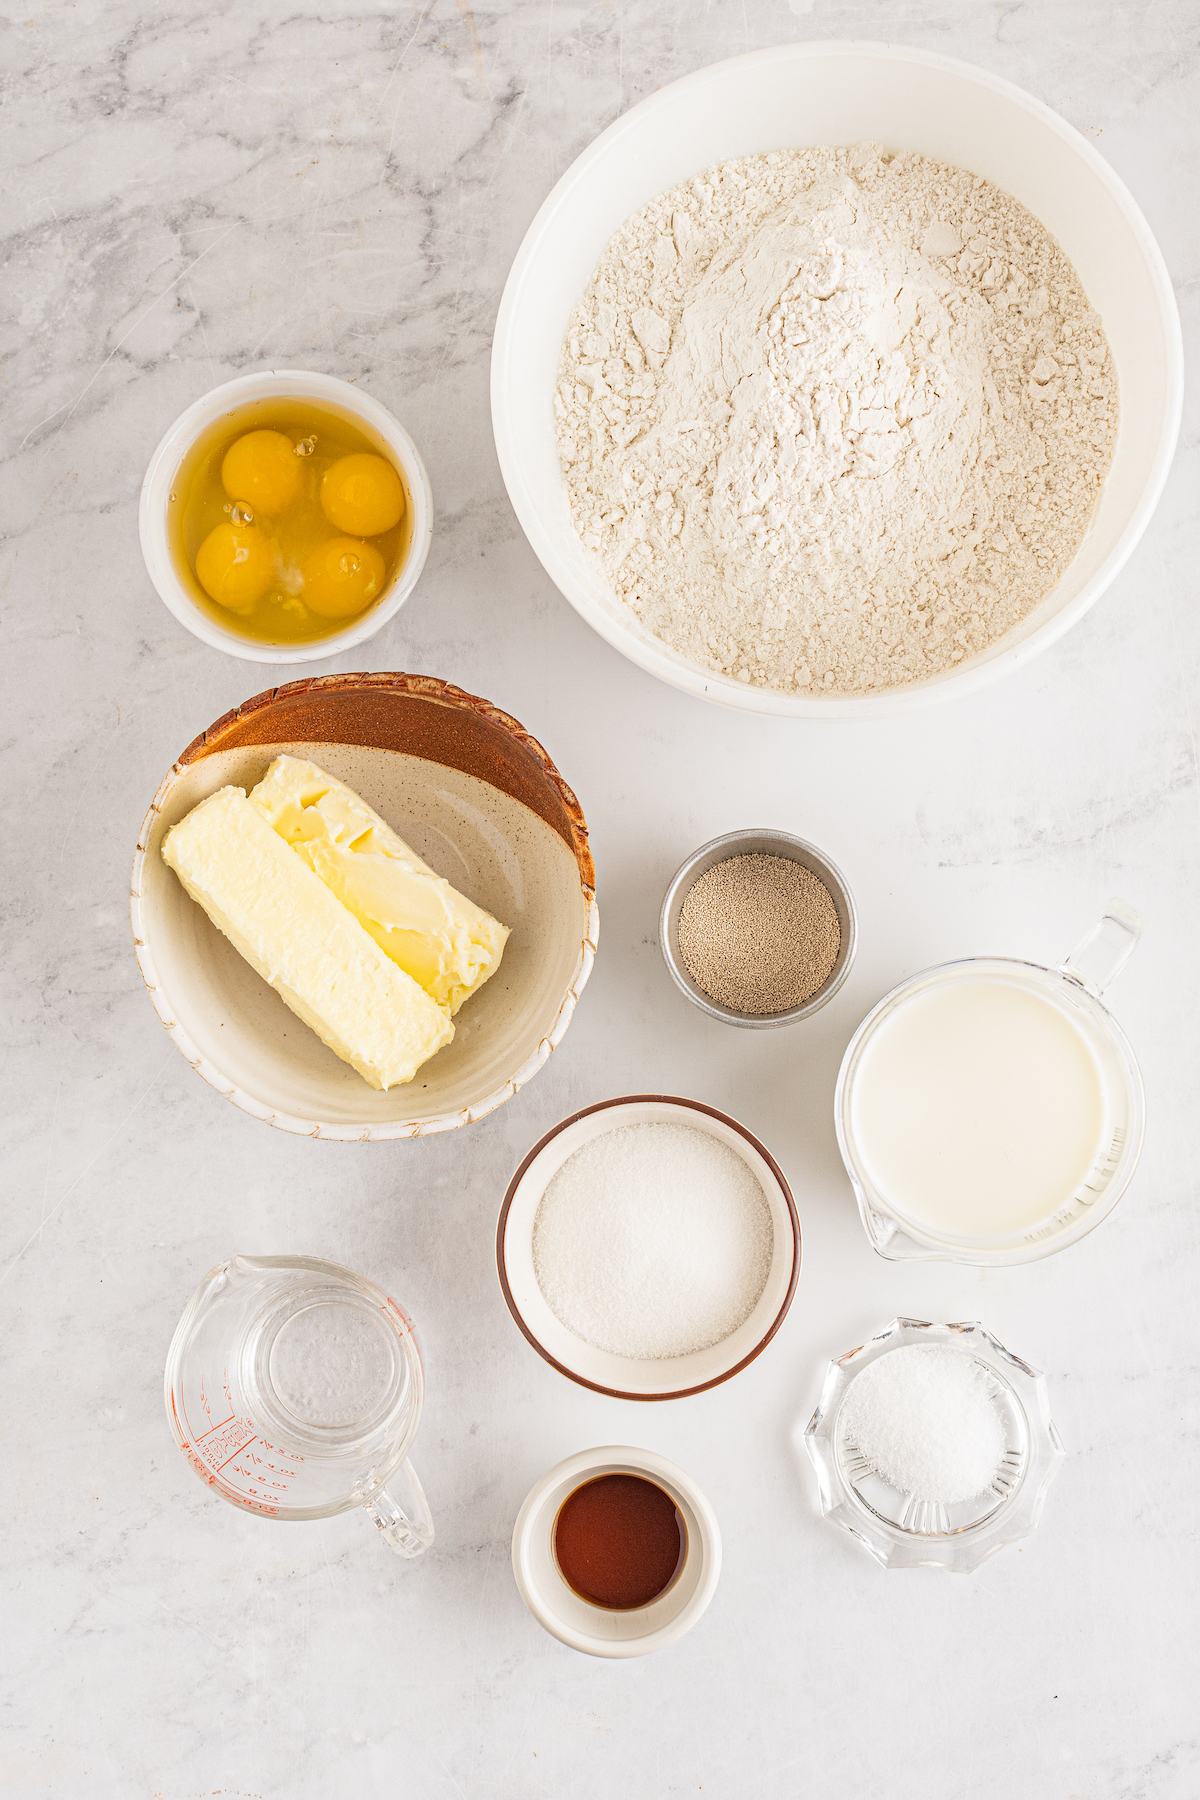 From top: Flour, eggs, butter, yeast, water, milk, sugar, vanilla, salt.